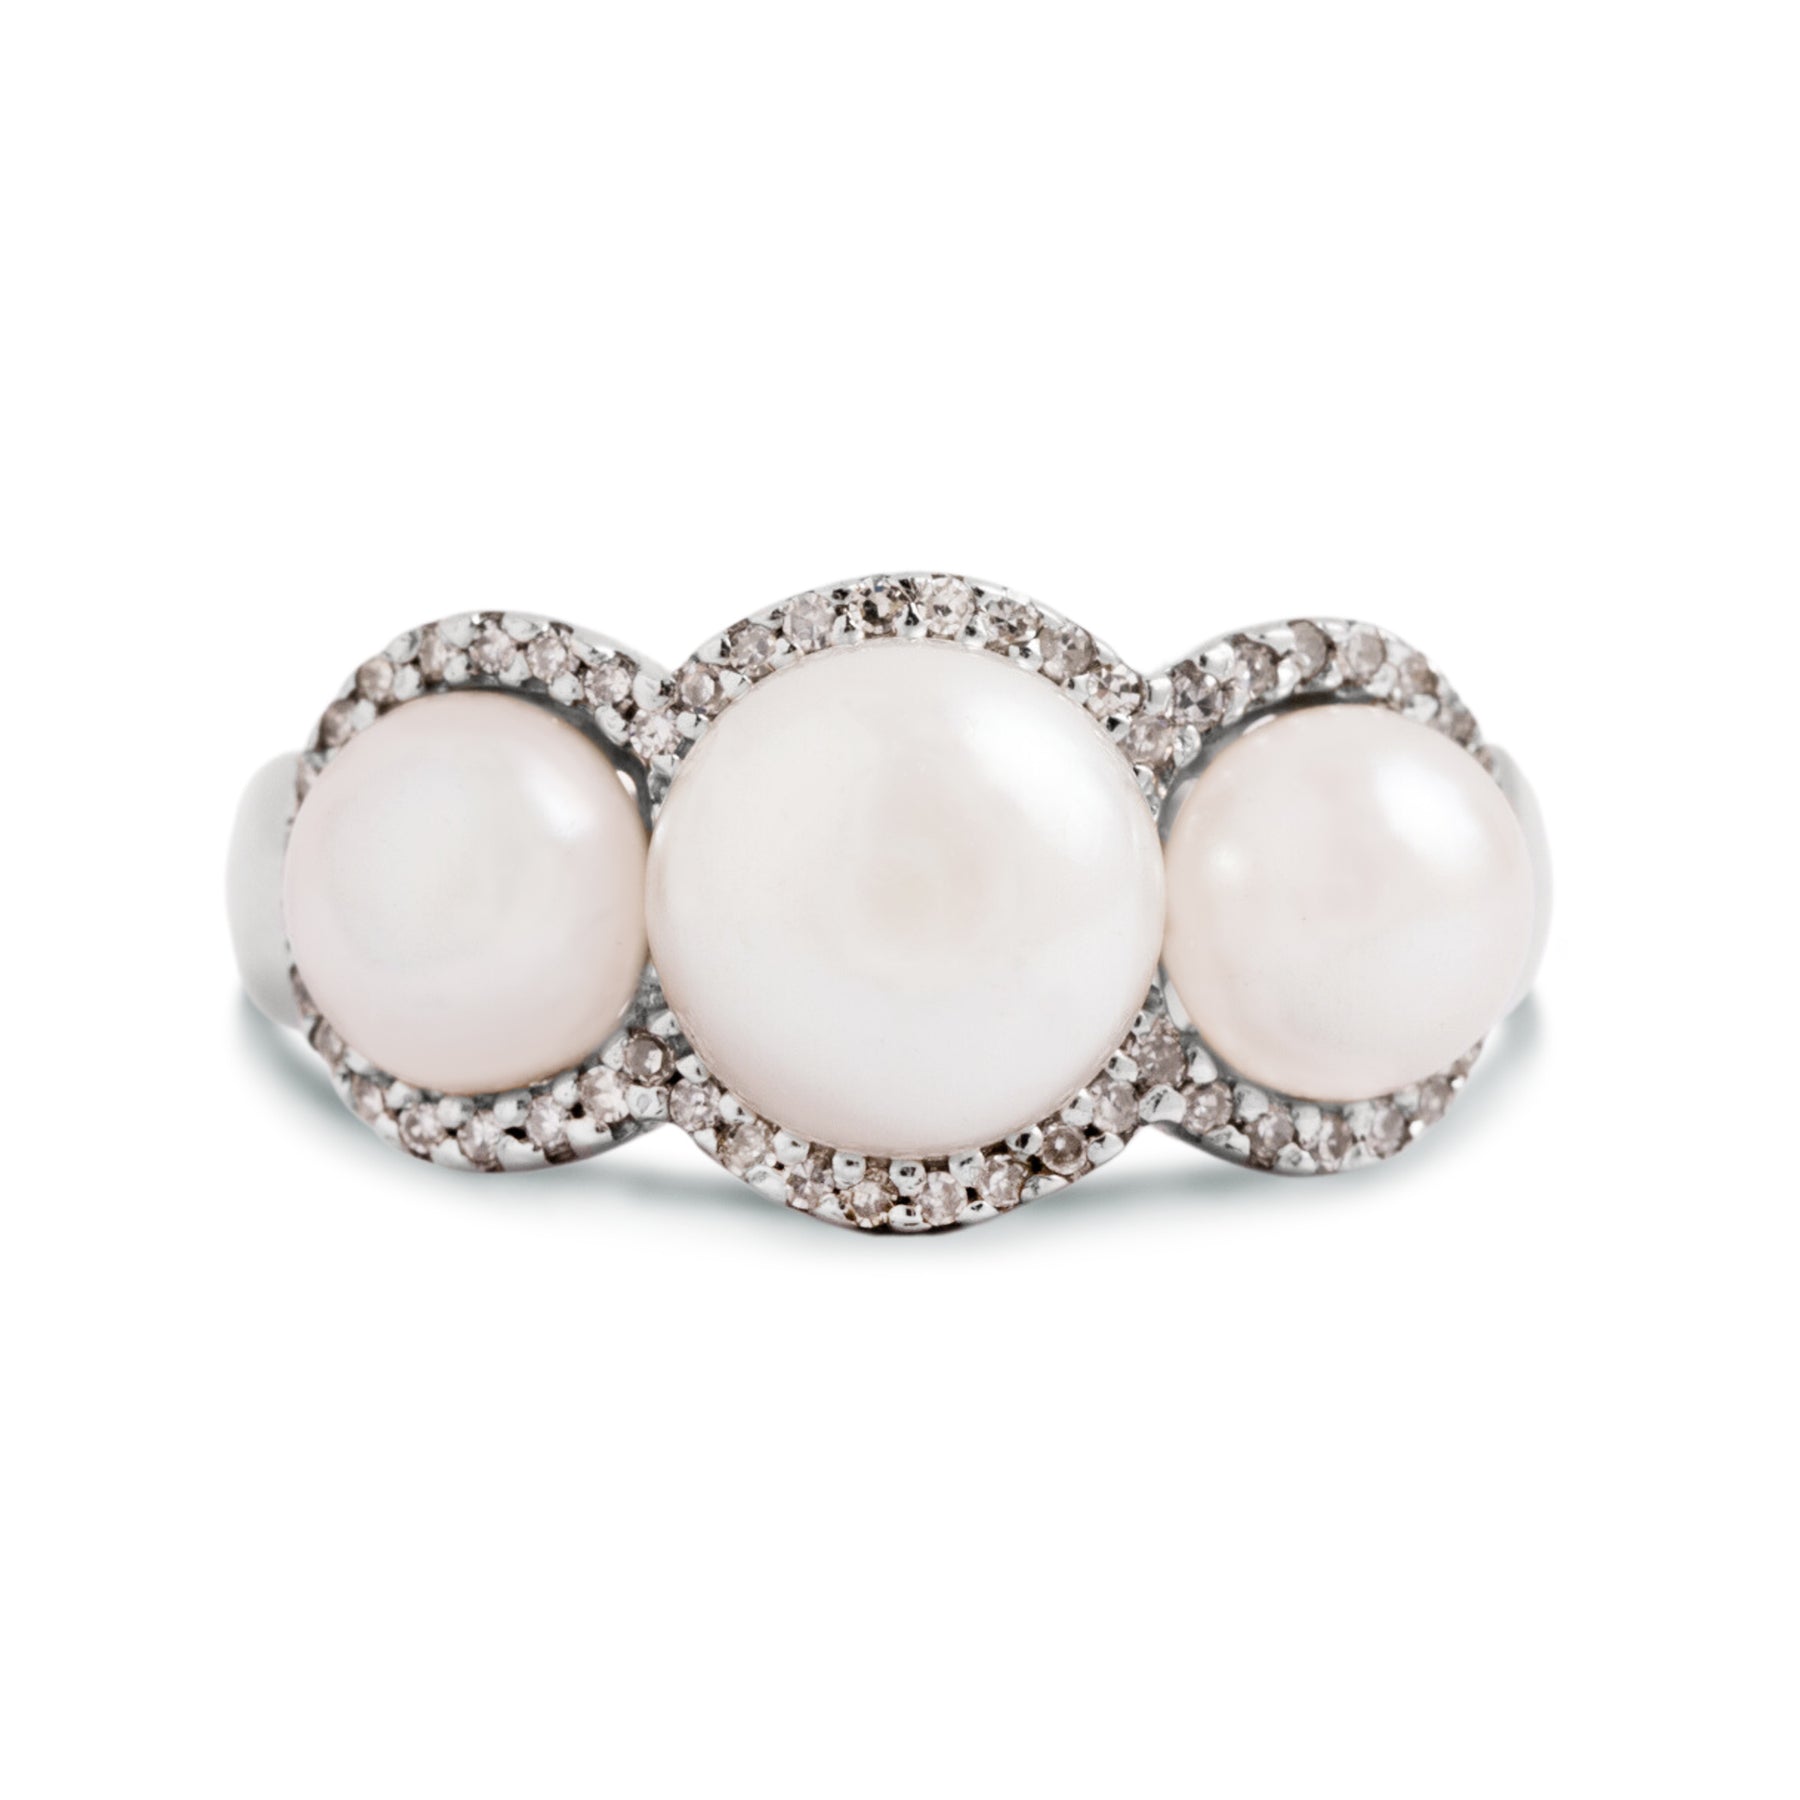 14k white gold estate triple pearl with diamond halo ring size 7